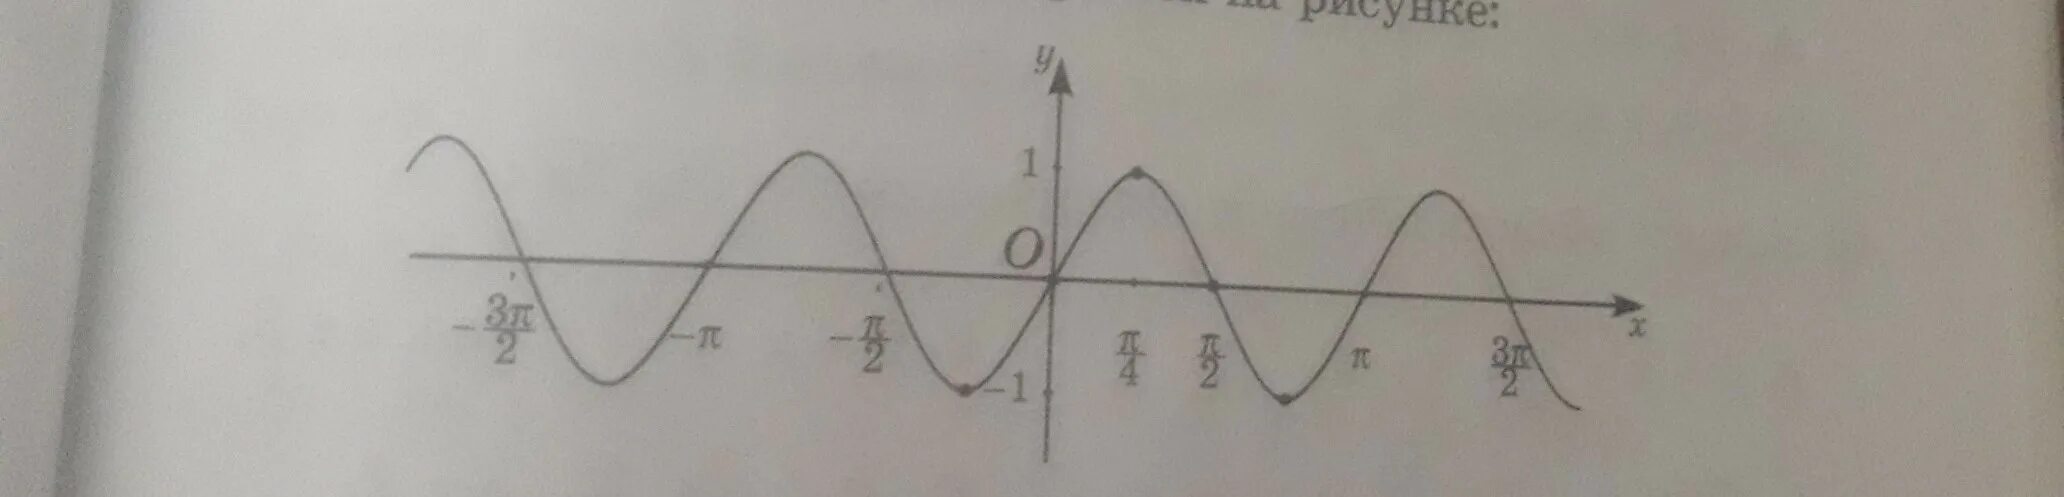 Y a sin x b c. Соs2x. График функции у соs х. Y= - соs x, x <=0. Какой график функции изображен на рисунке y -2 cosx.